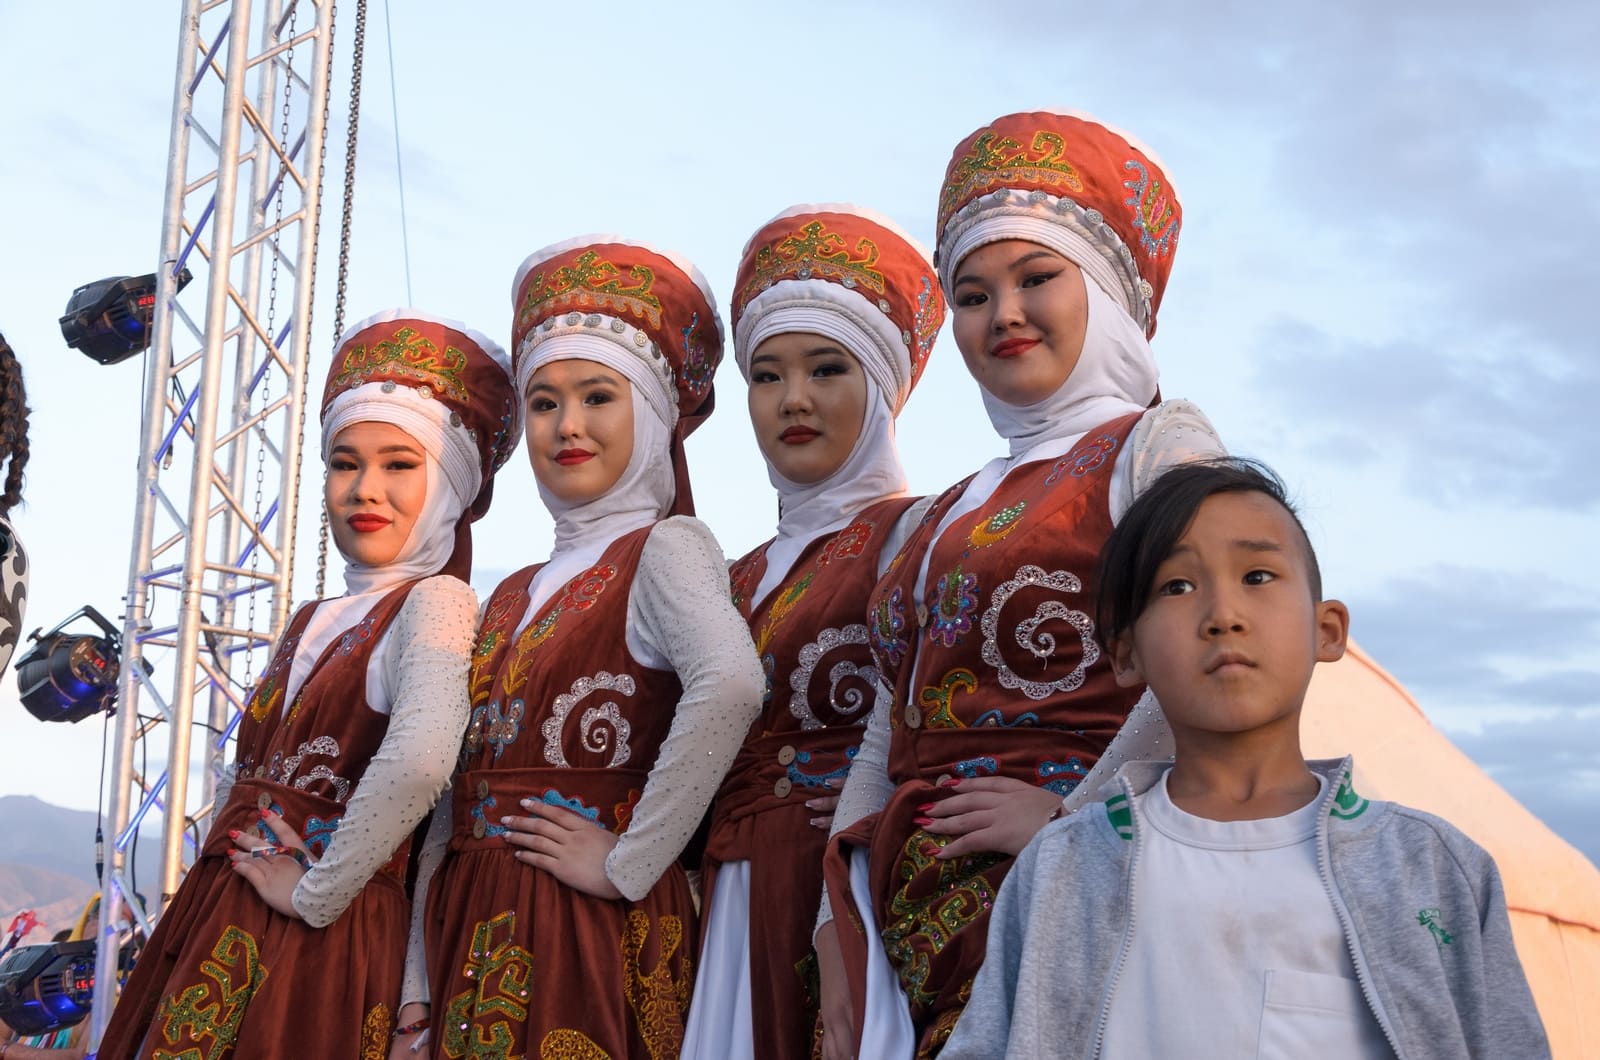 kolfest festival kyrgyzstan issykkul music art lake event july bishkek travel party rave edm kolfest photo